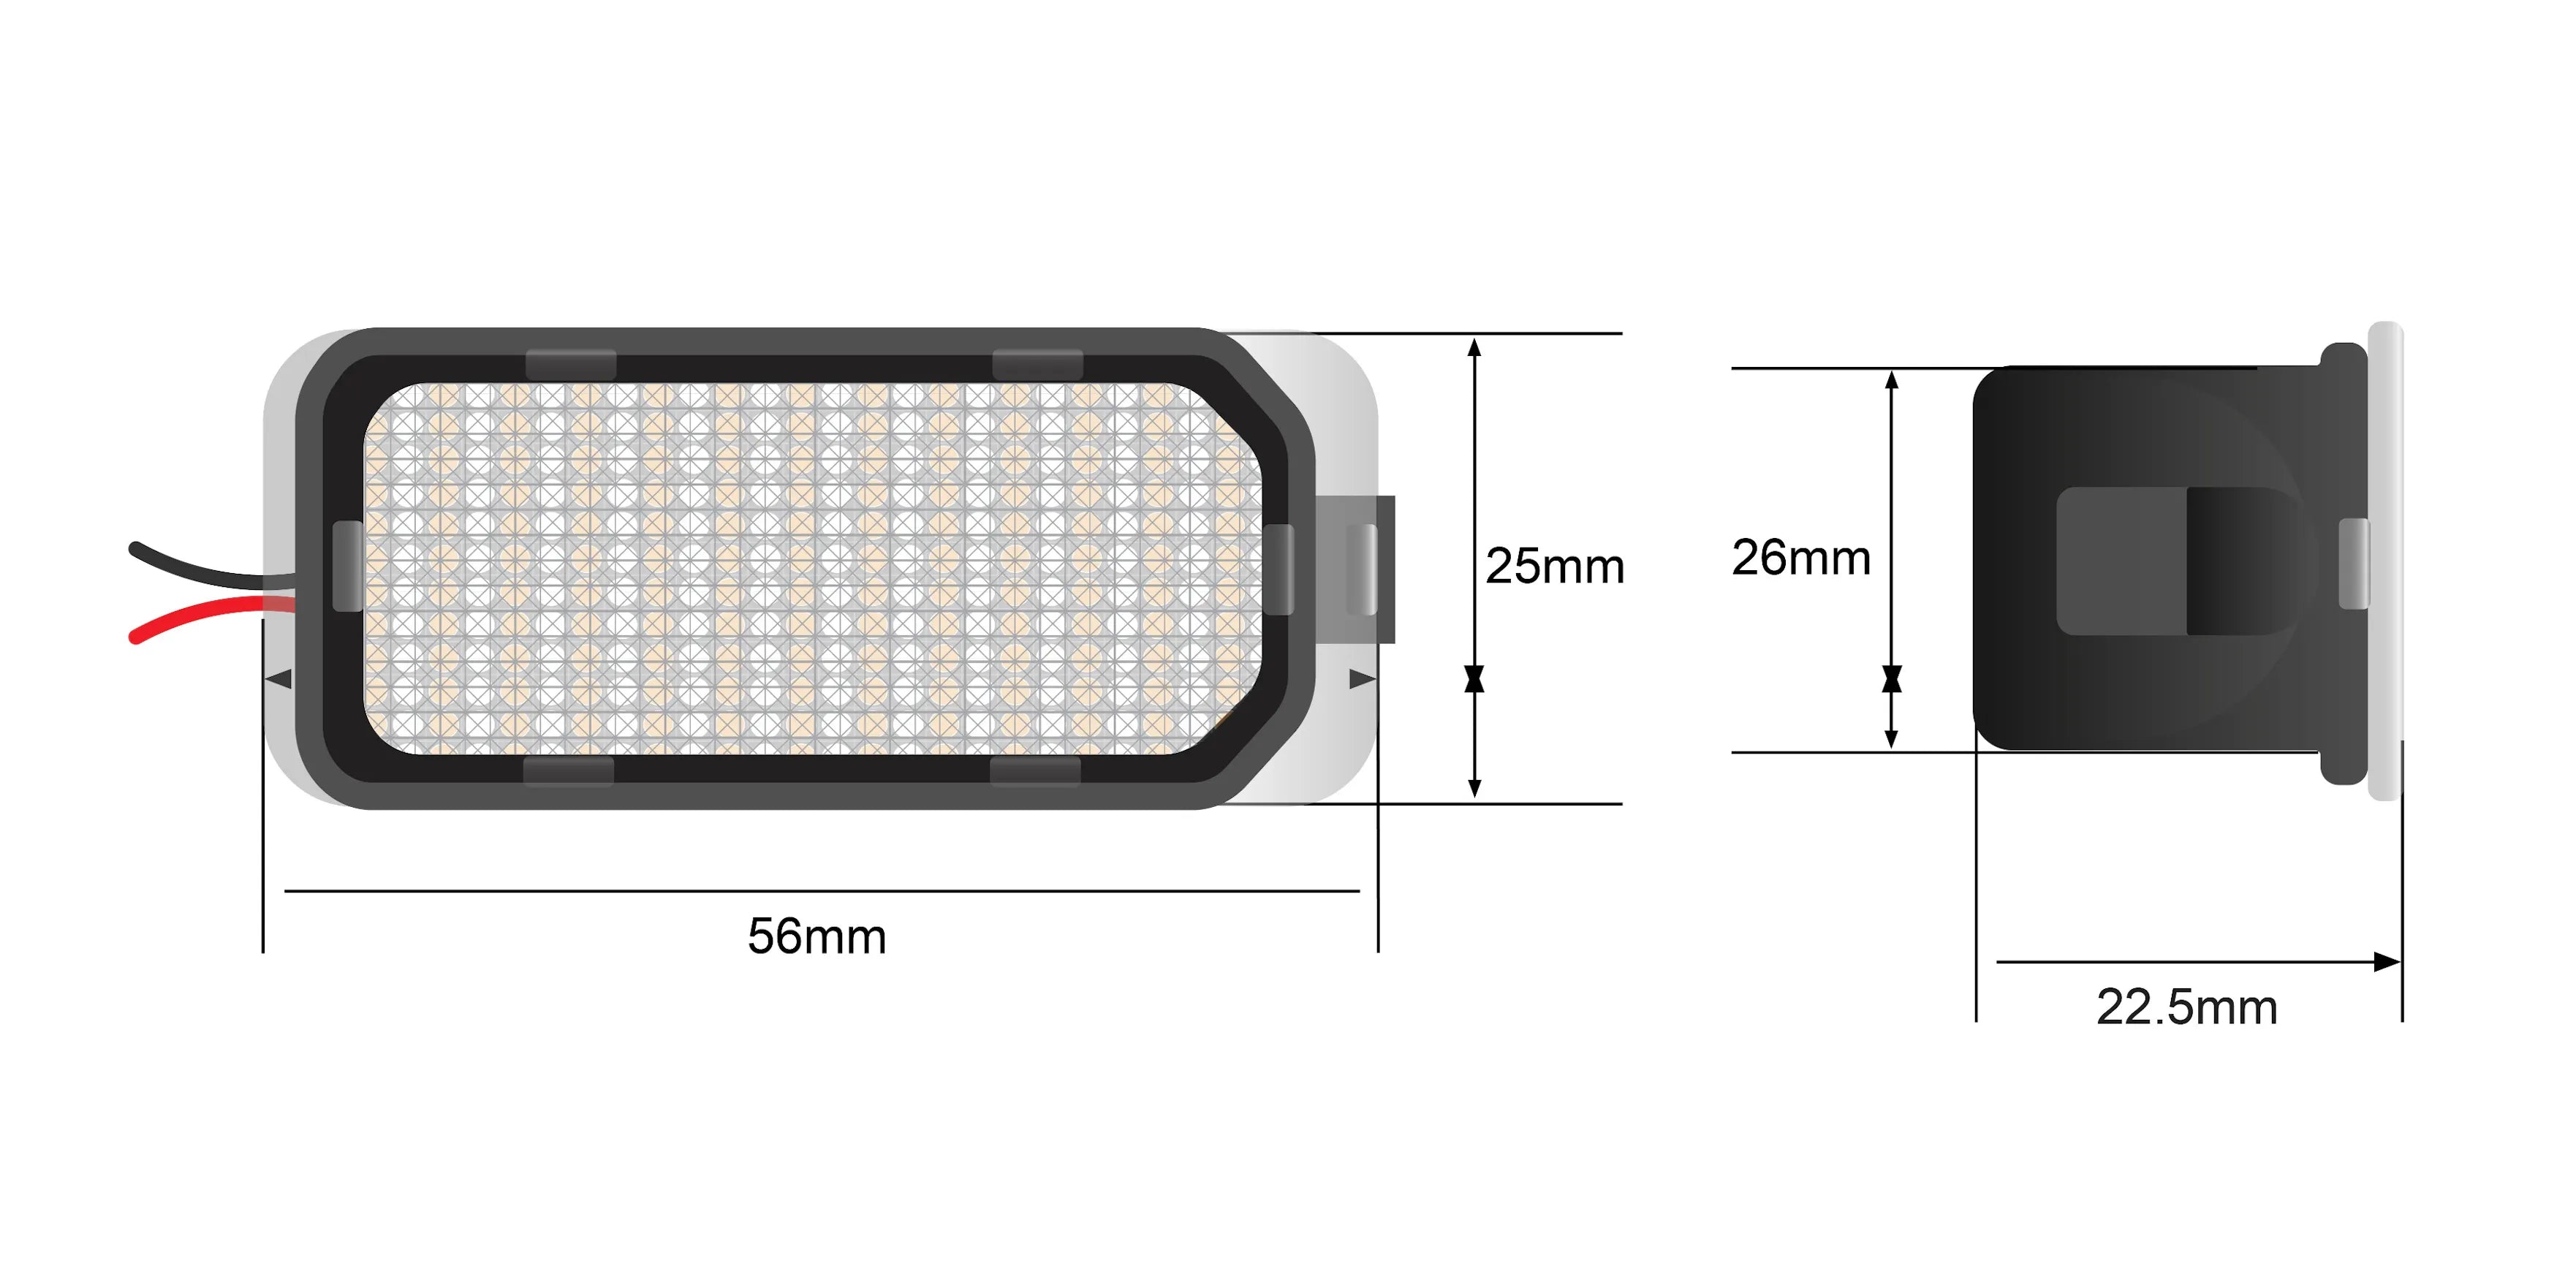 STEDI LED Nummernschildbeleuchtung für Ford Ranger